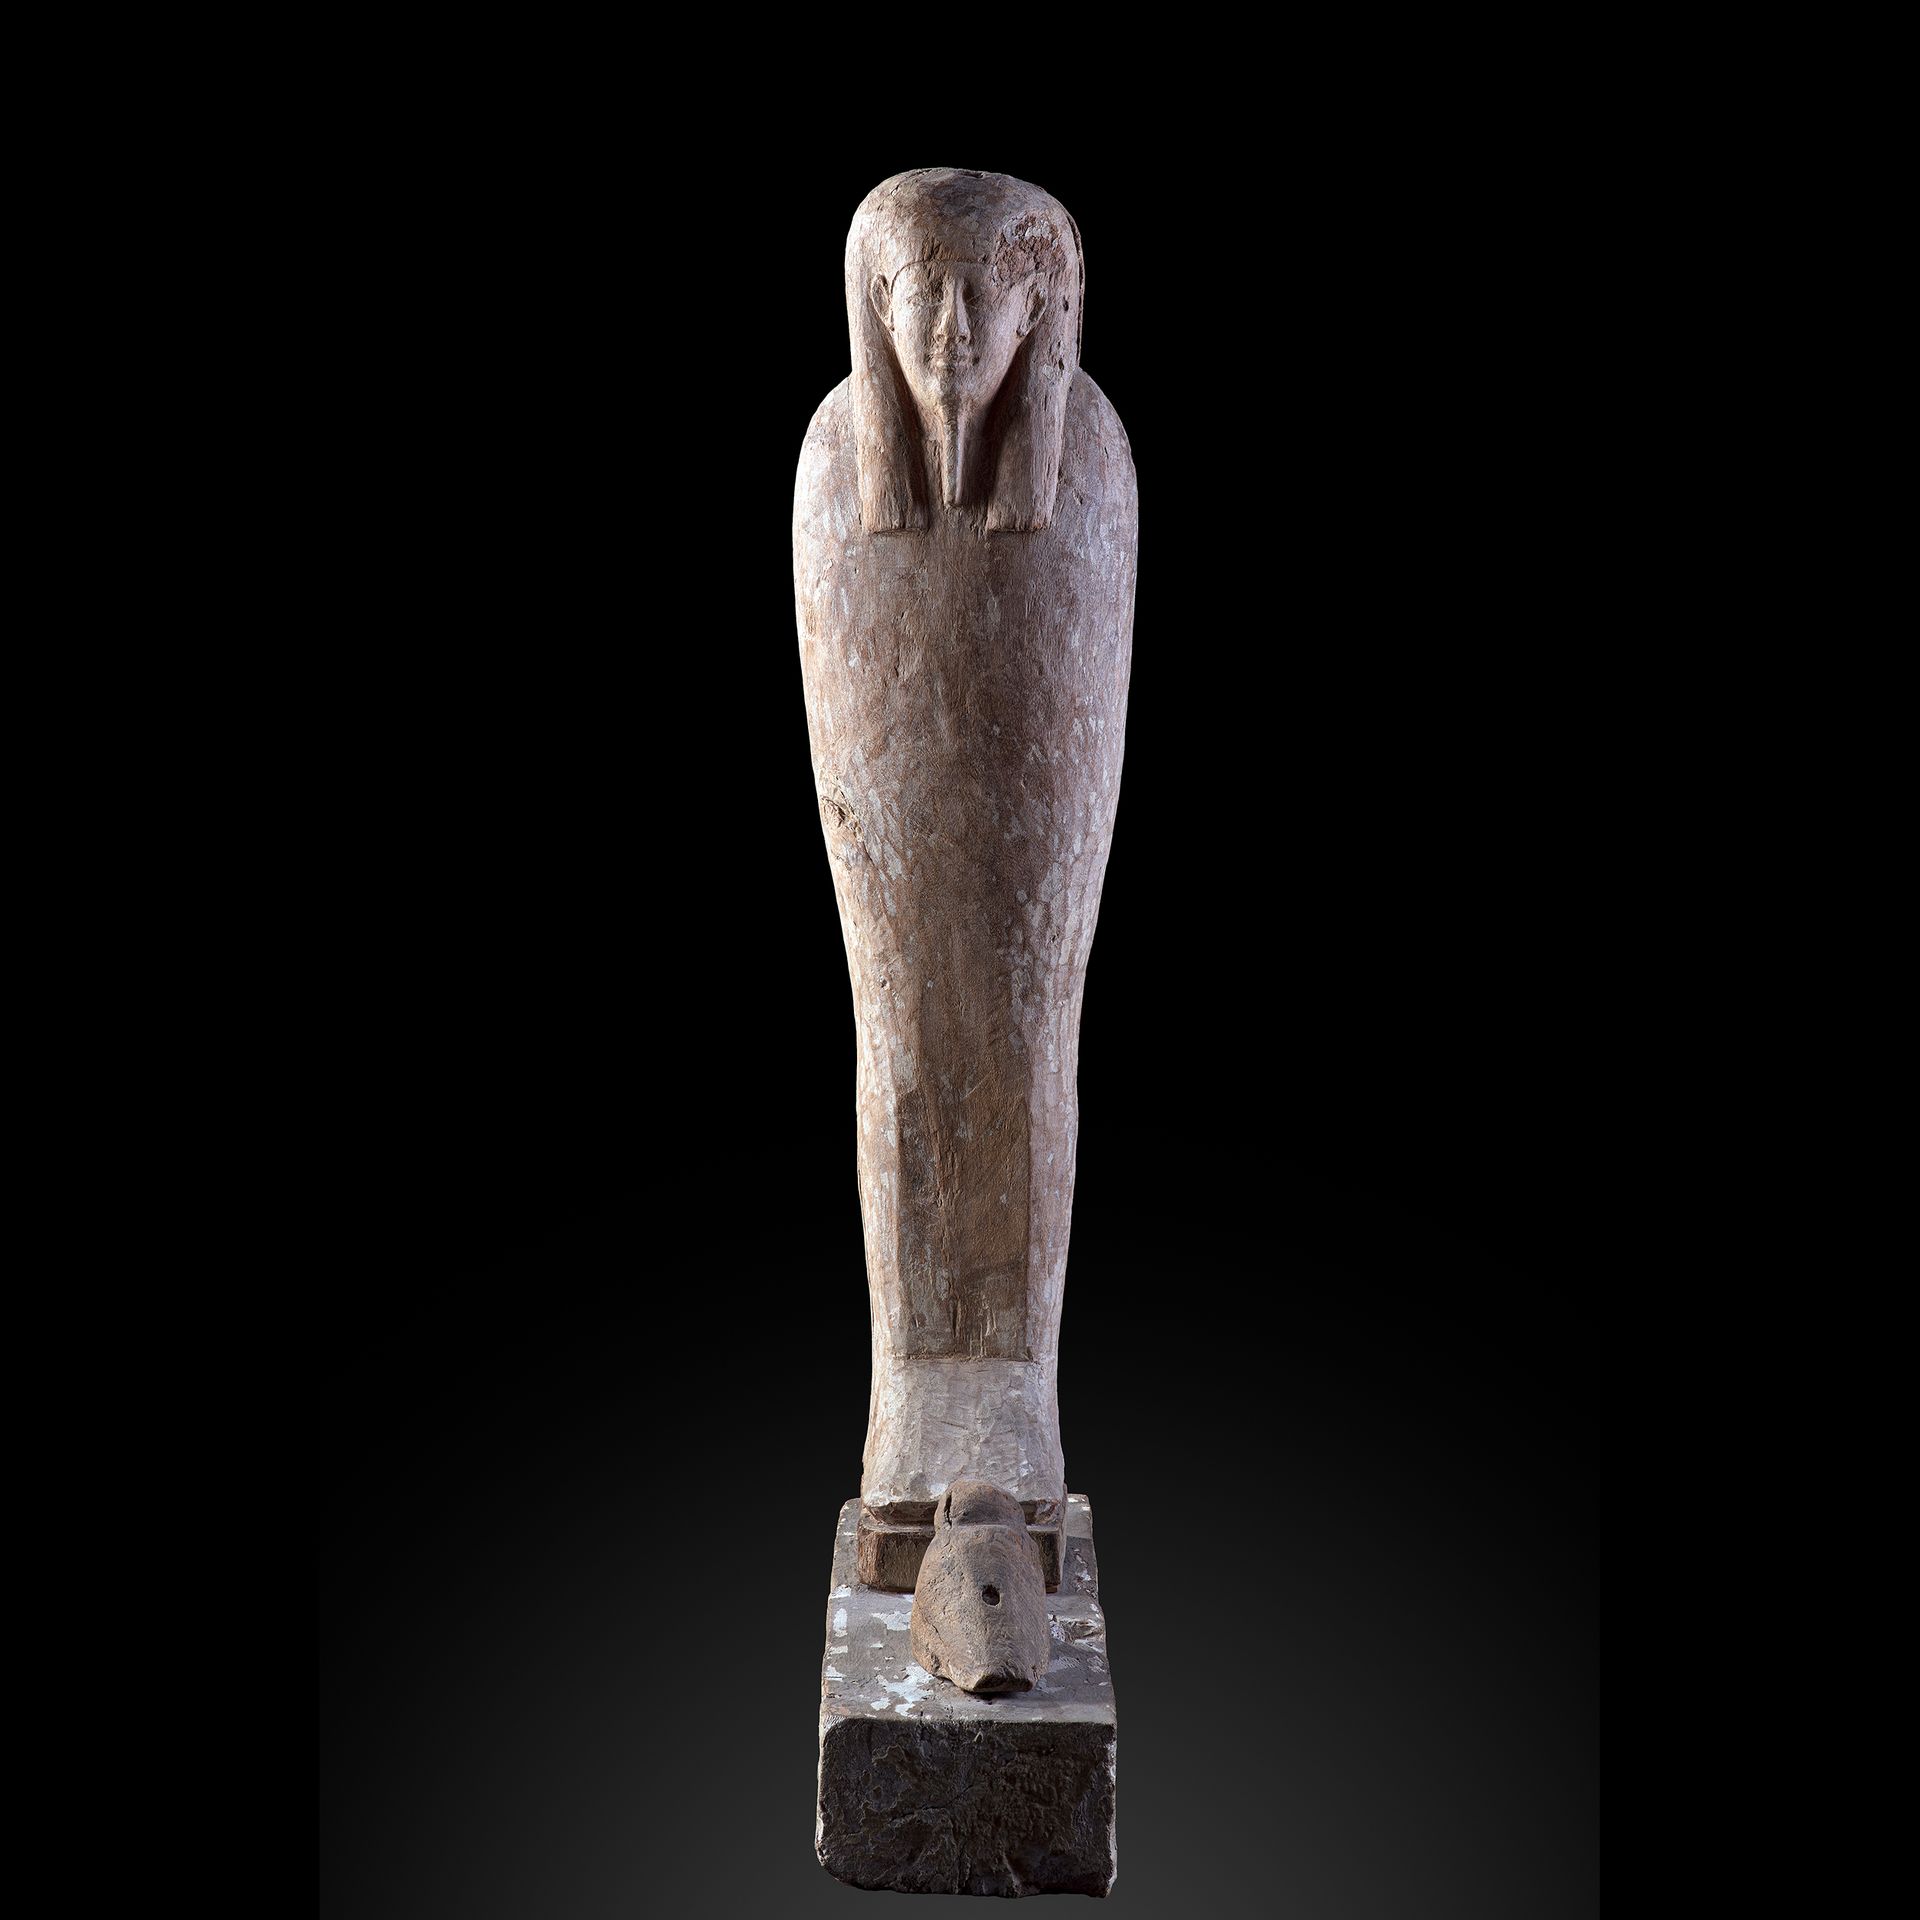 Null PTAH SOKAR OSIRIS
Wood
H. 65 cm 
Egypt, Ptolemaic period, 332-30 B.C. 

Pro&hellip;